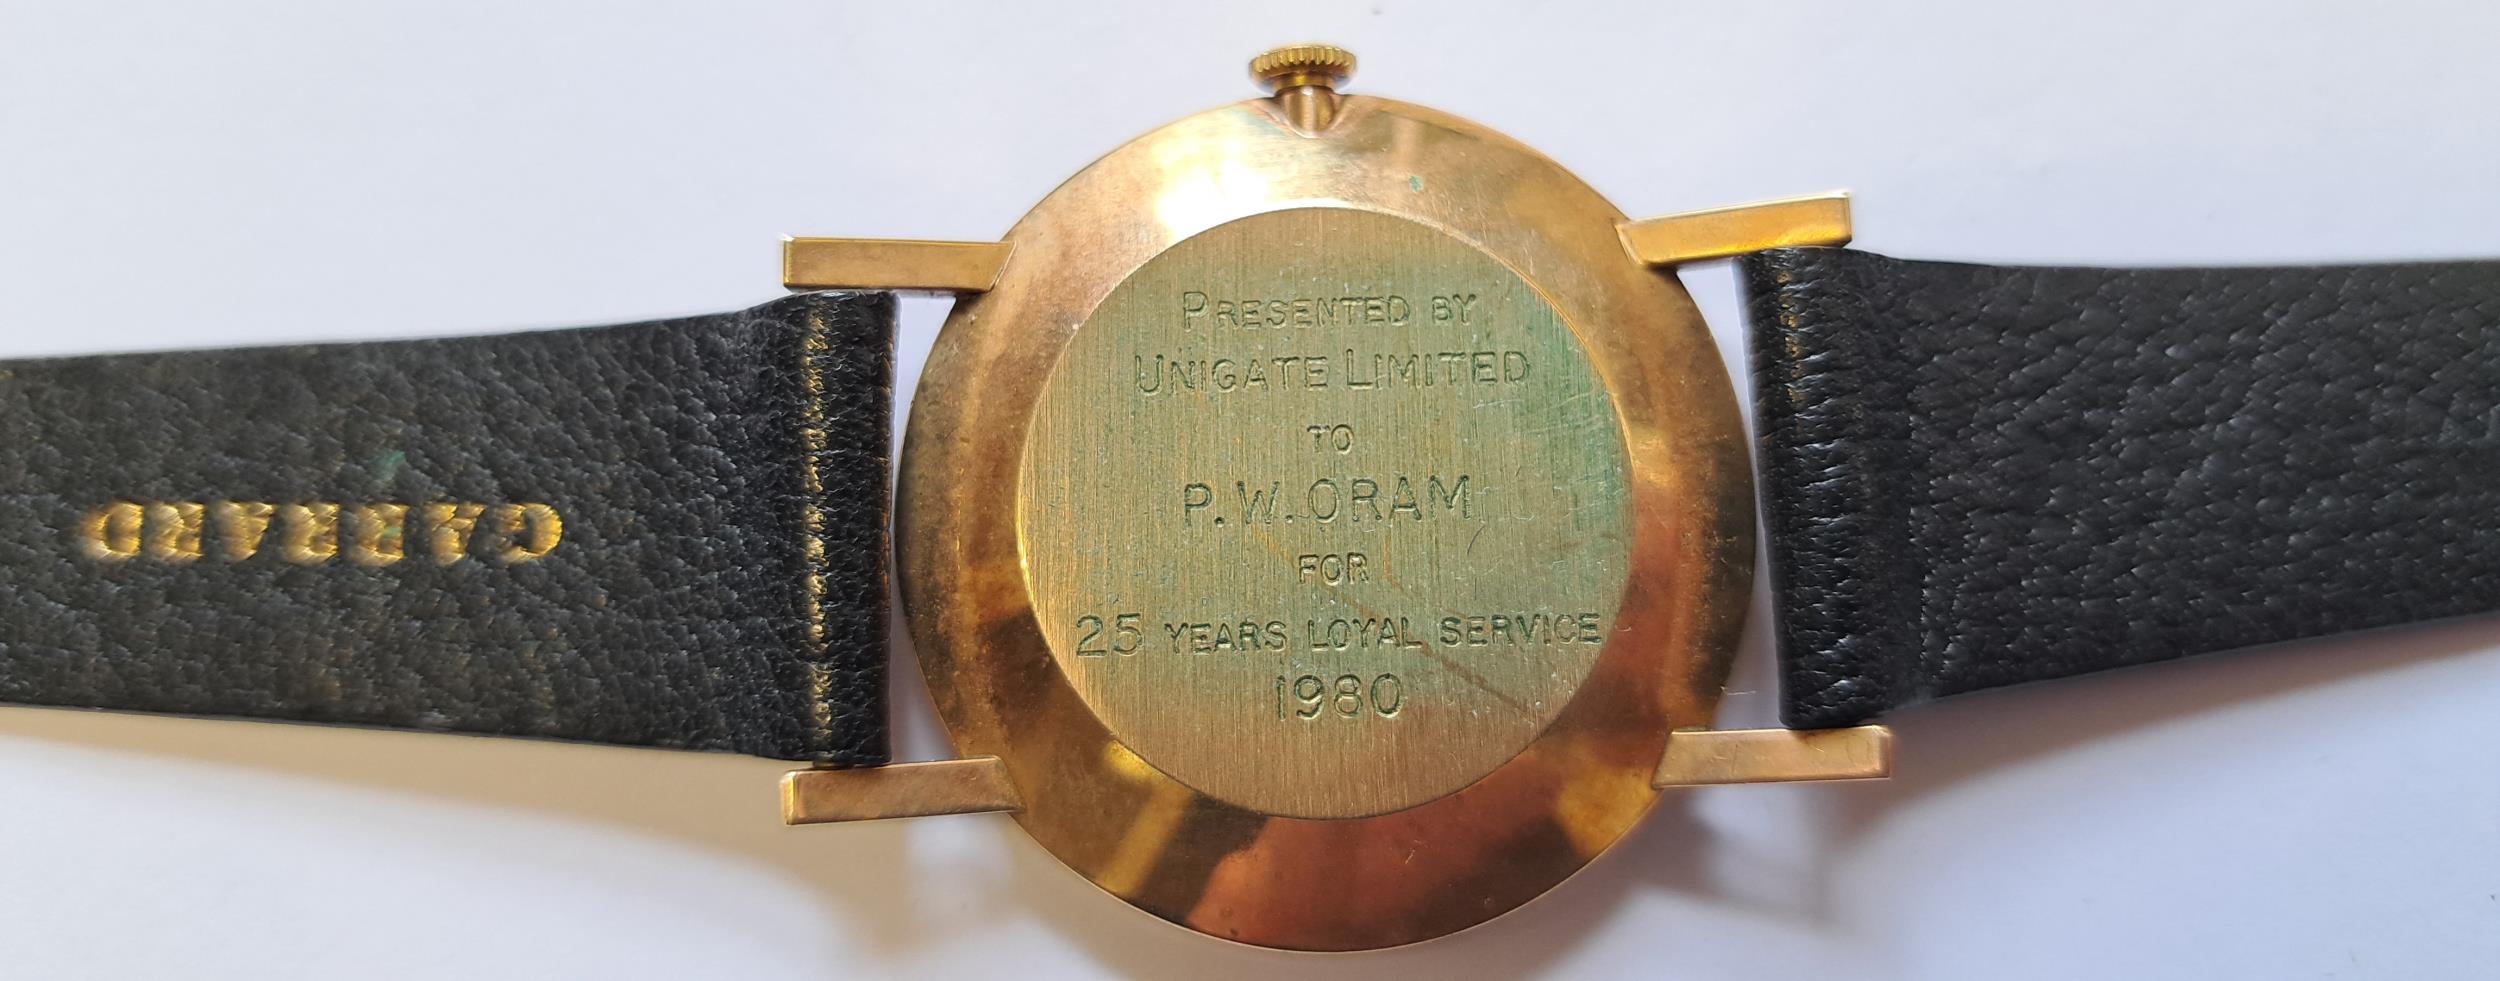 Garrard, gentleman's circular gold cased wristwatch with black leather strap, in original box - Image 3 of 3